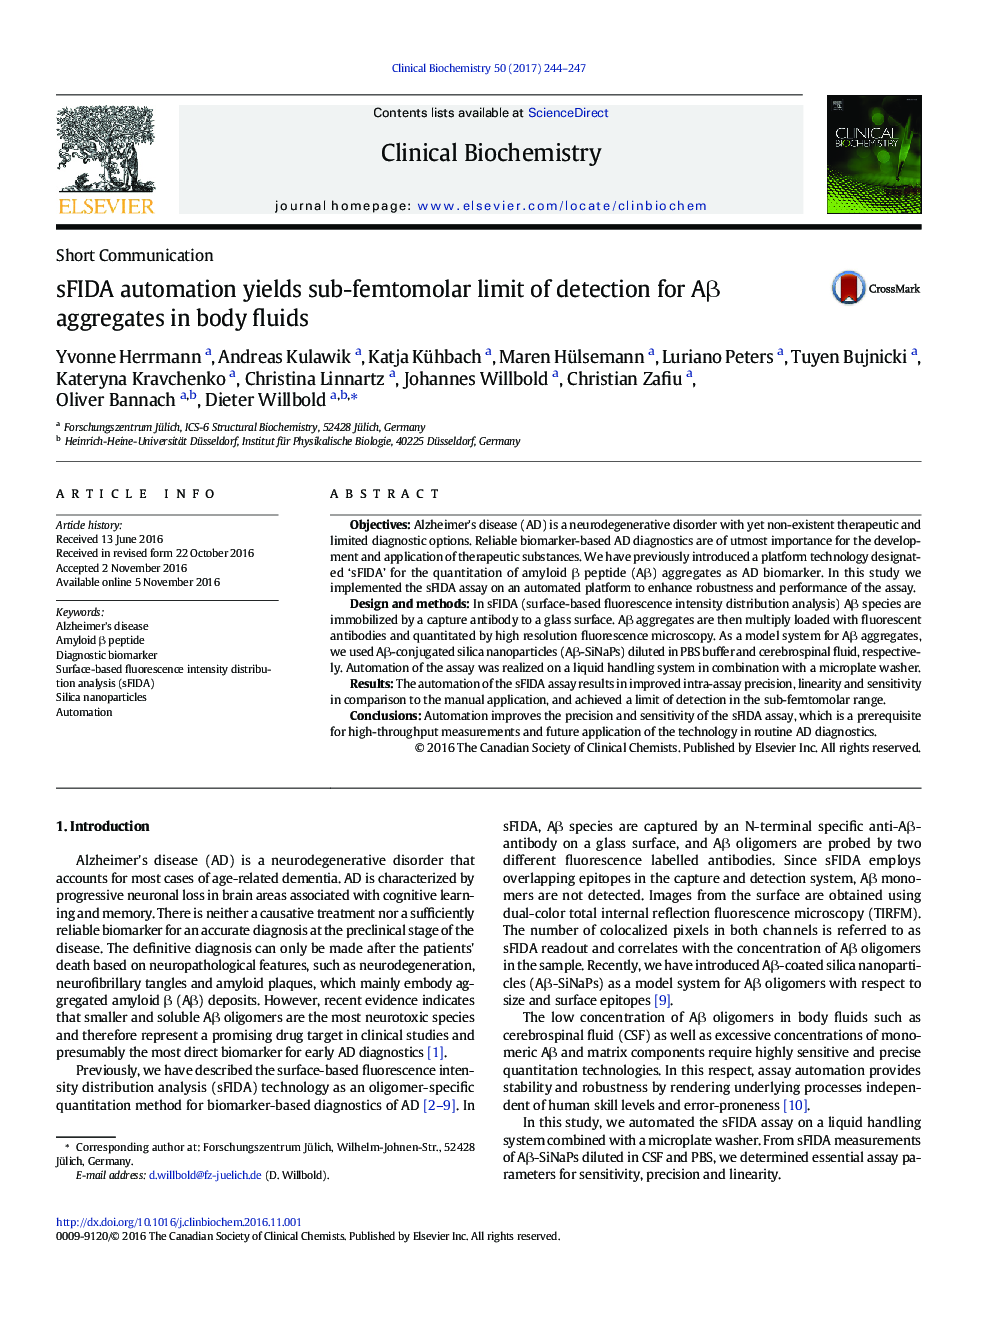 Short CommunicationsFIDA automation yields sub-femtomolar limit of detection for AÎ² aggregates in body fluids